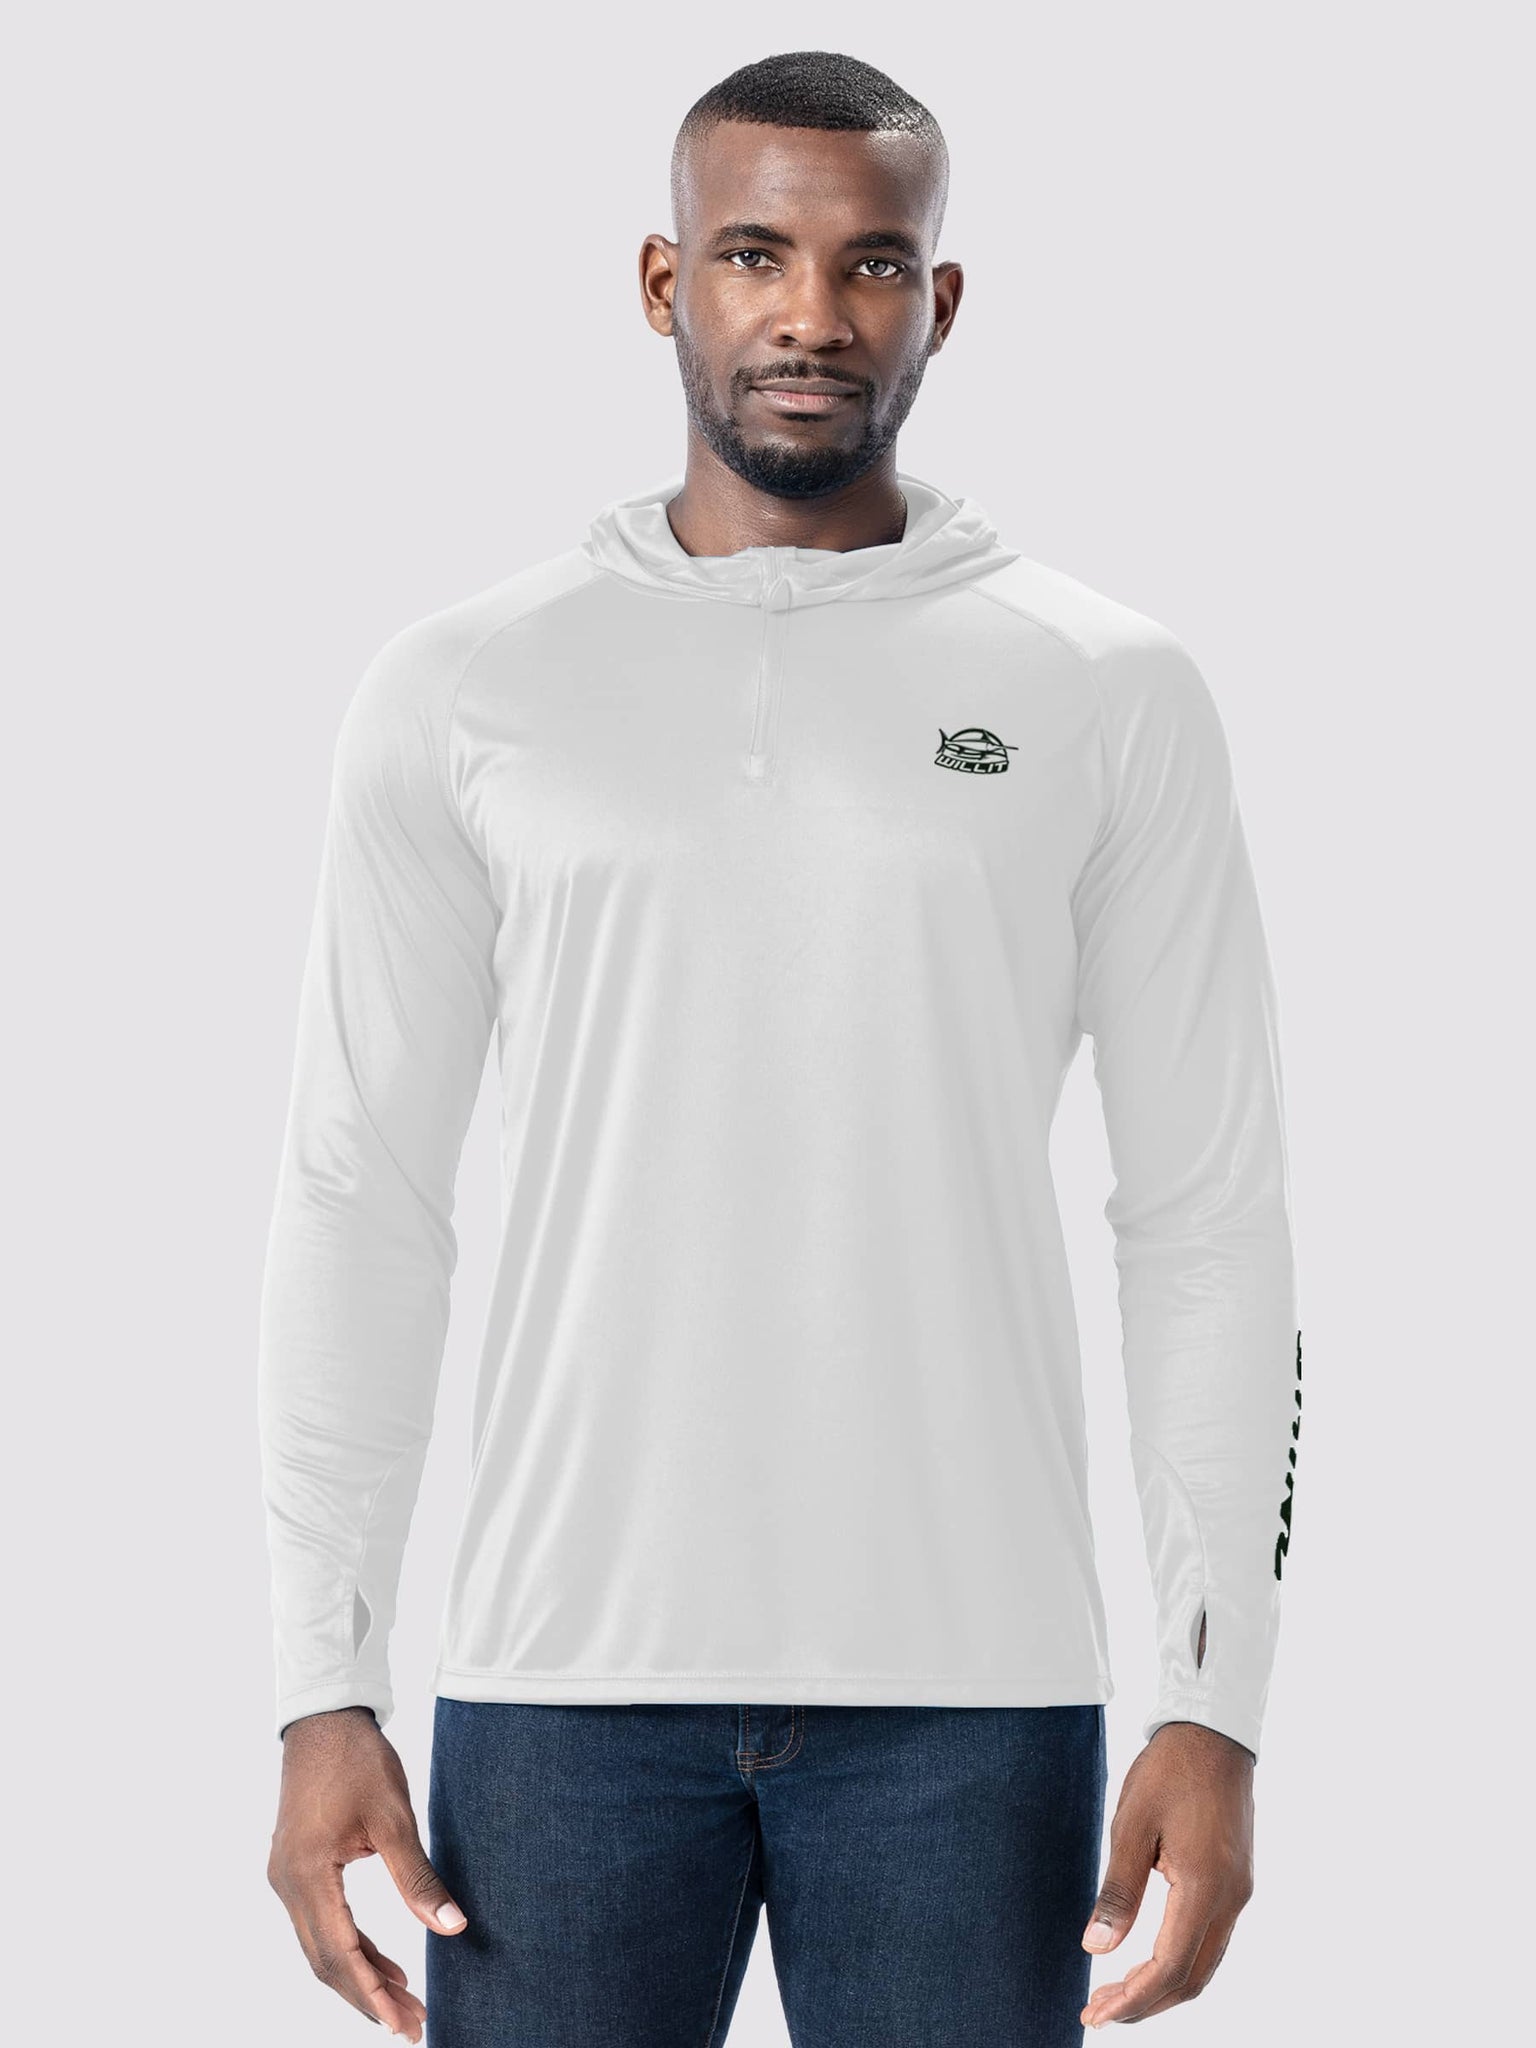 Willit Men's Quarter Zip Sun Shirts UPF 50+_White_model1